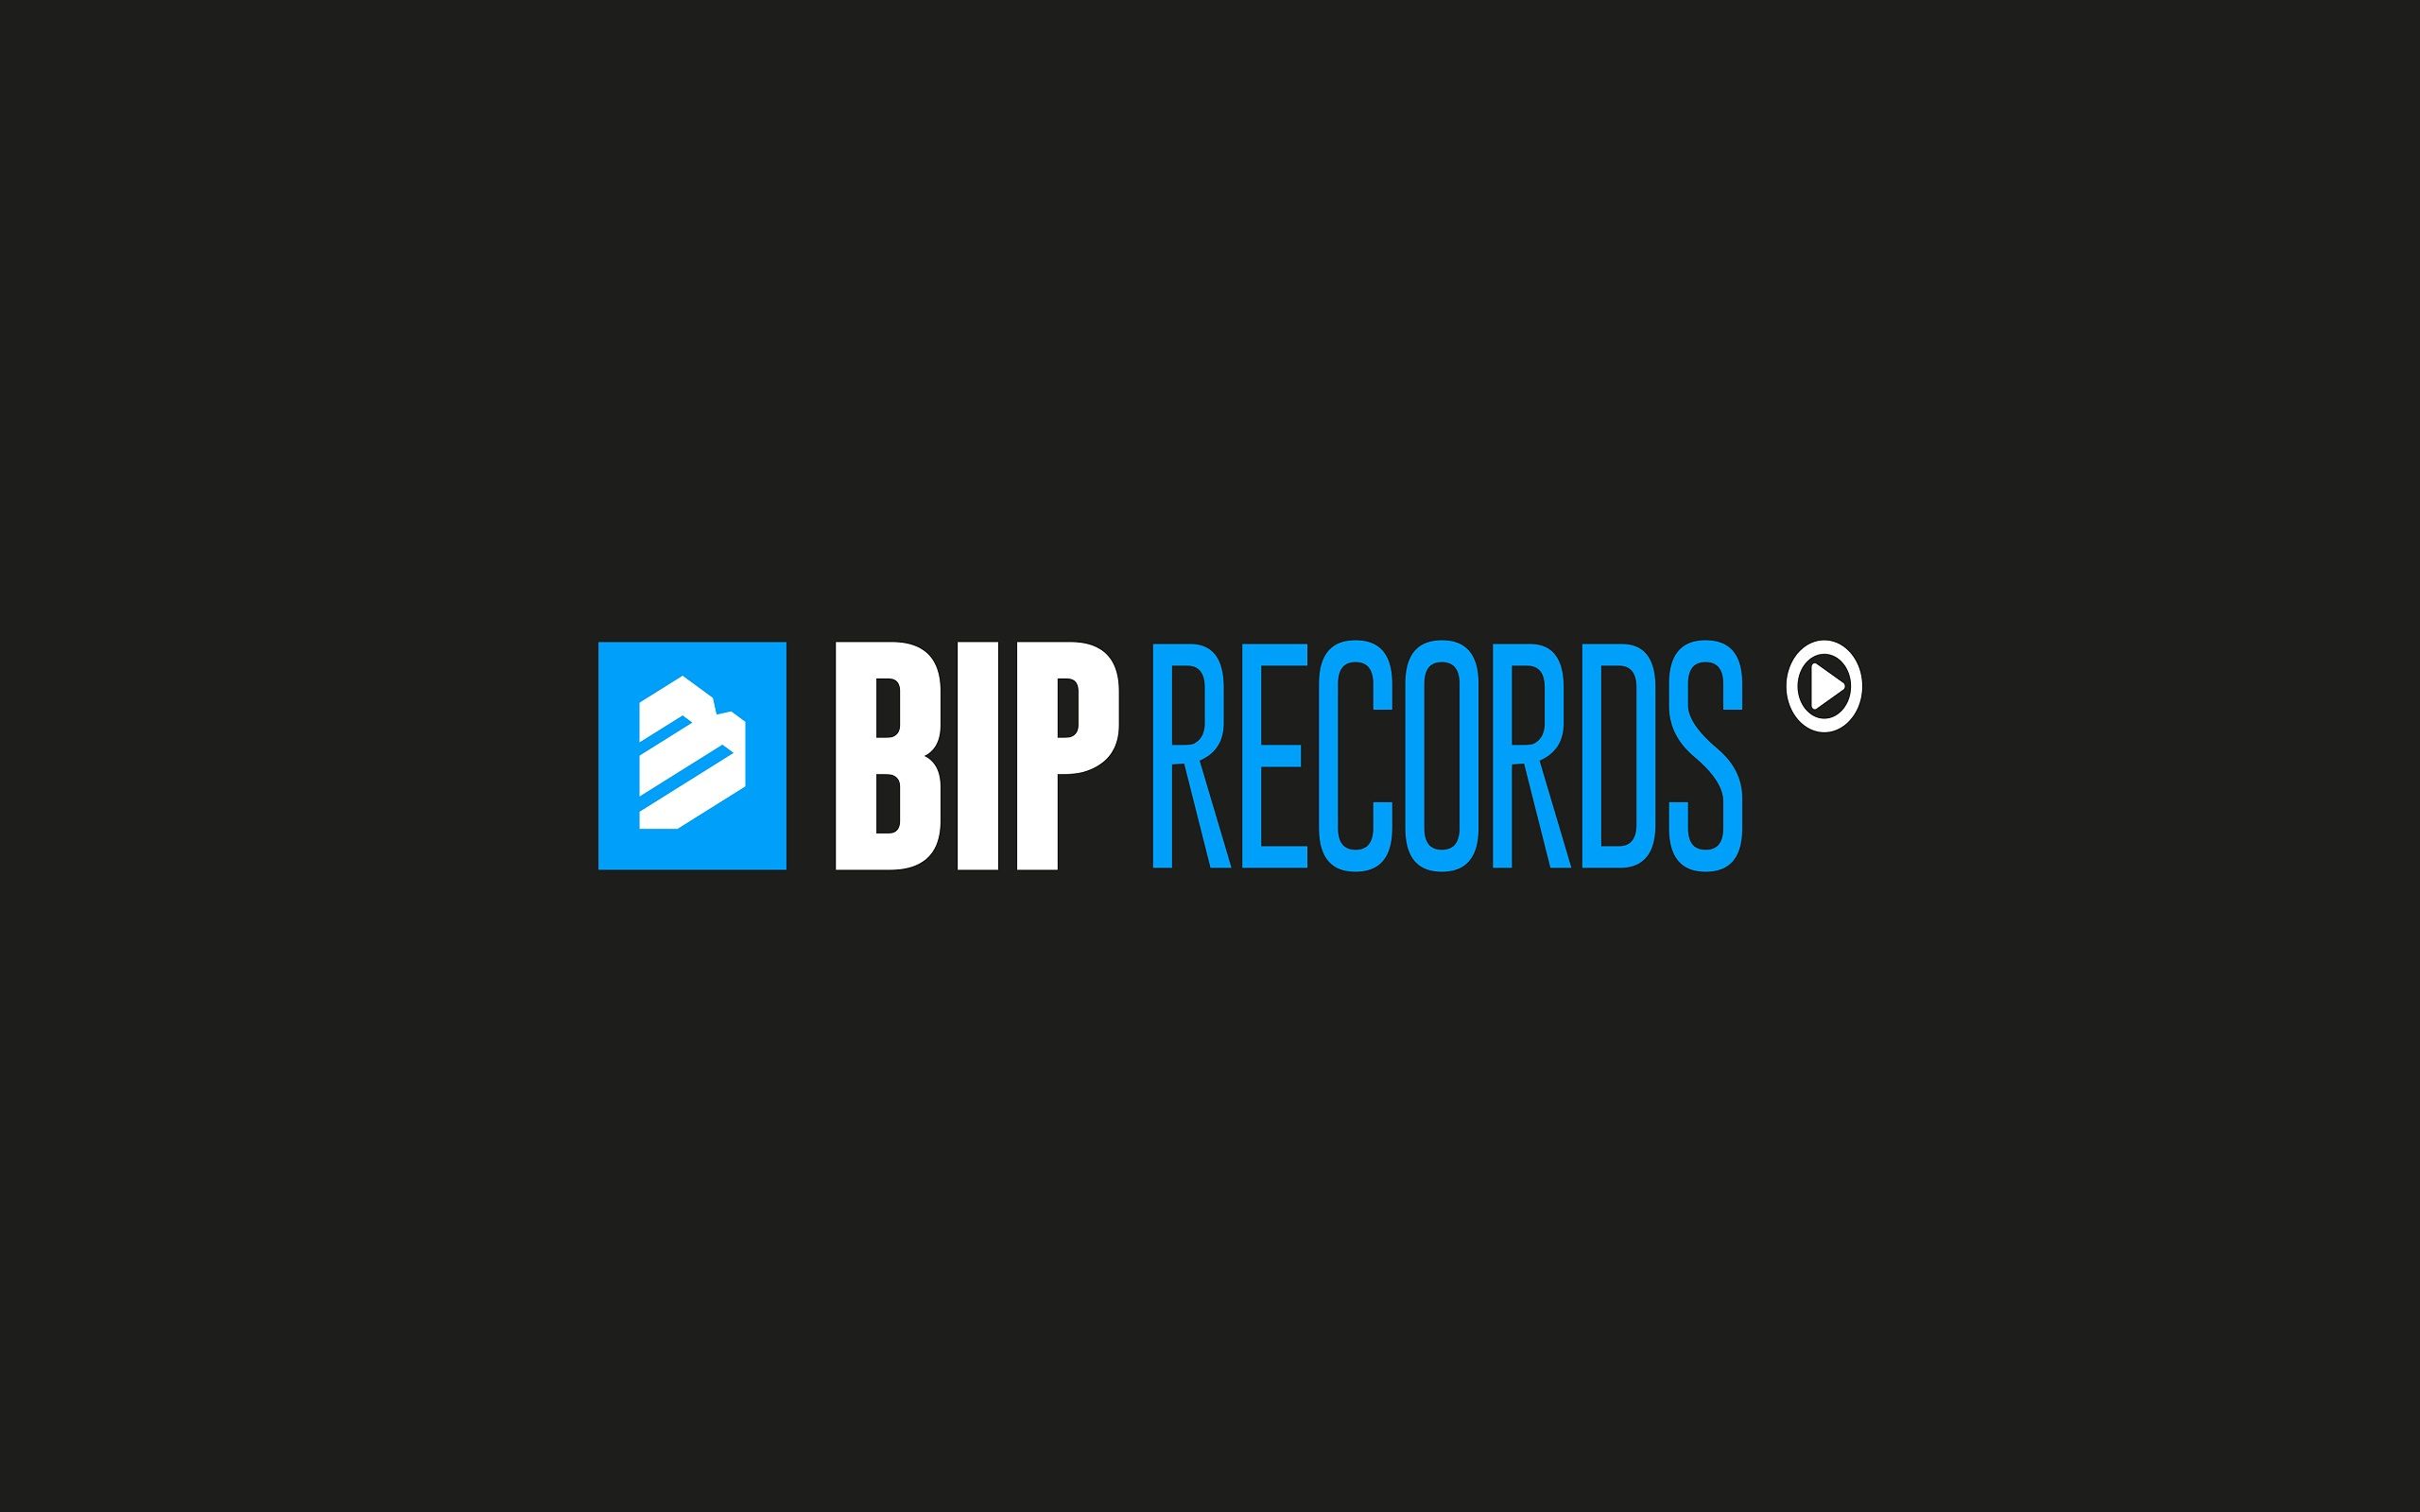 BIP Records